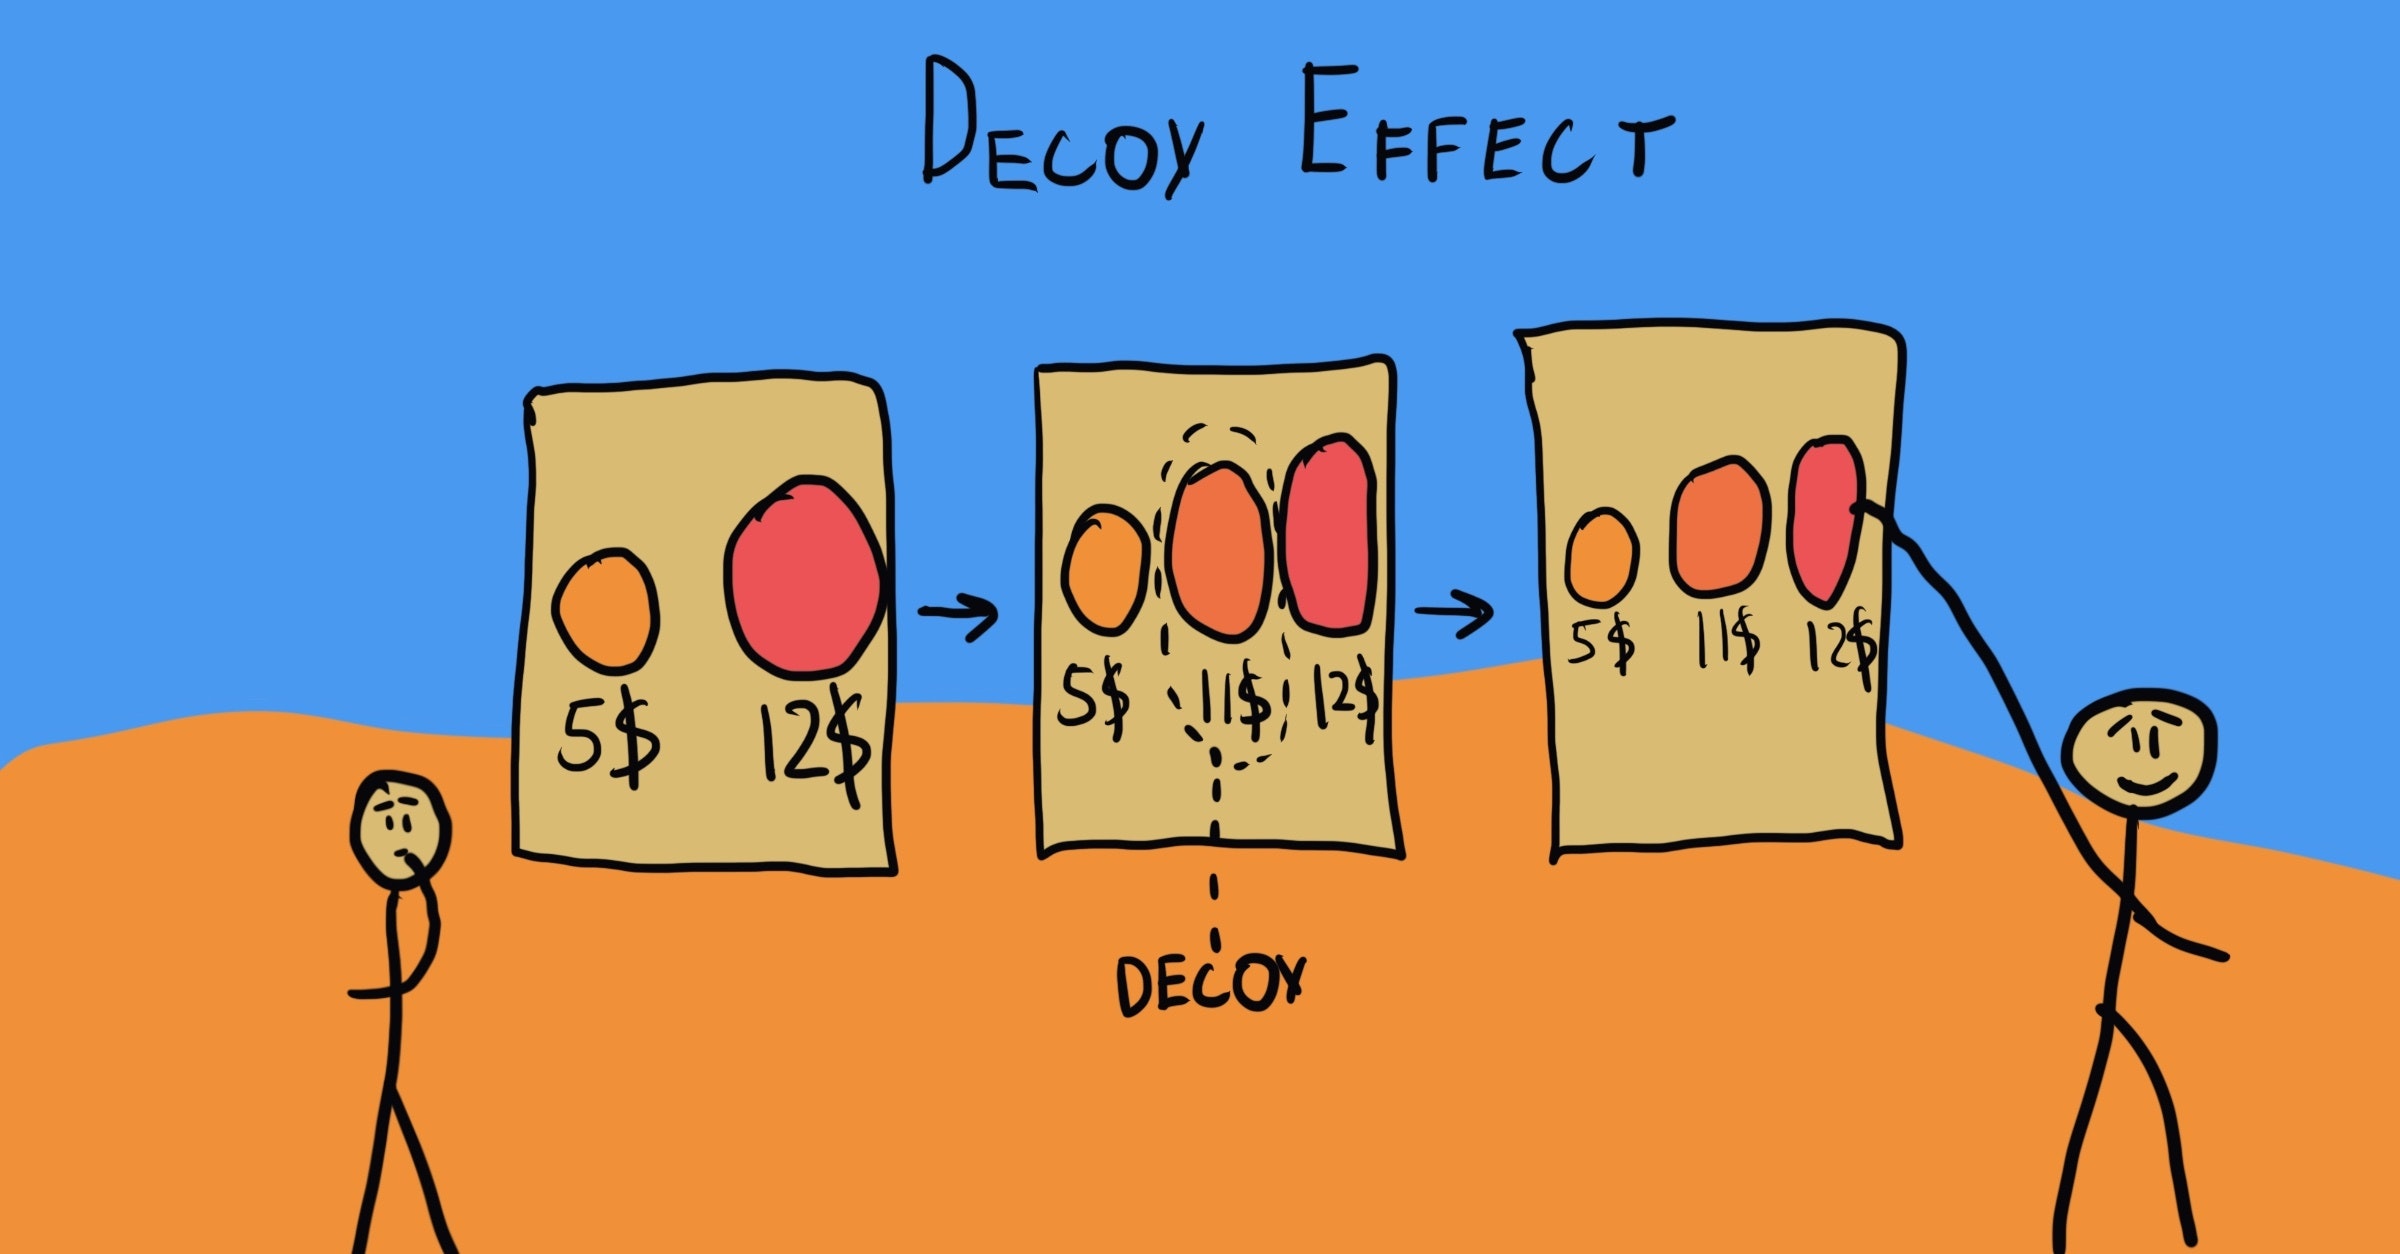 Decoy Effect illustrations